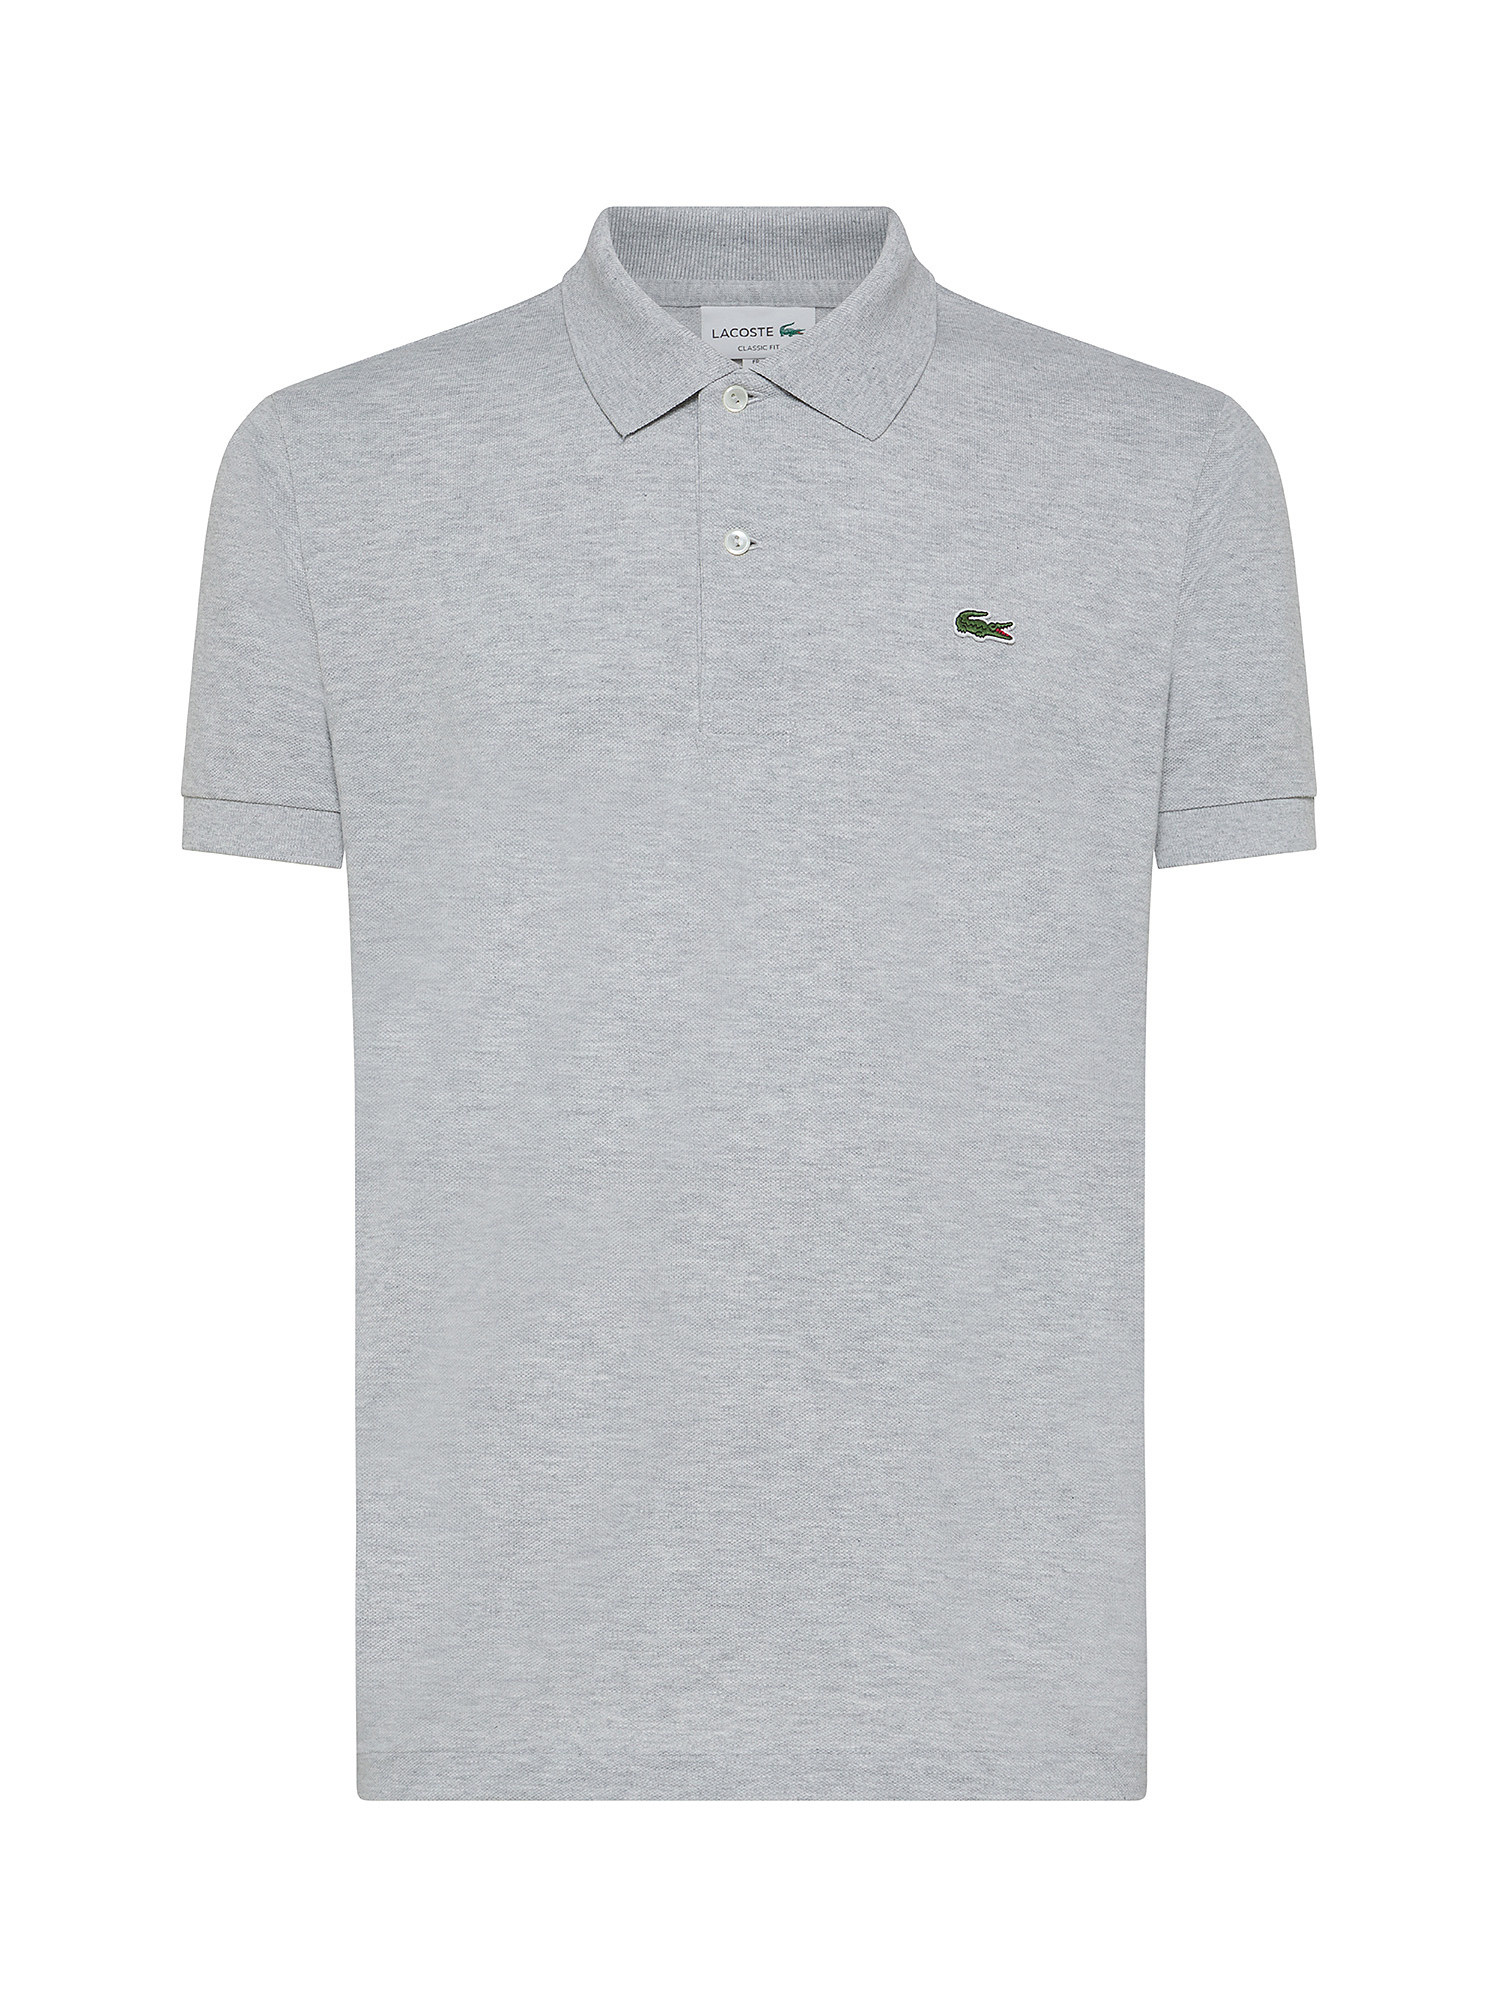 Lacoste - Classic cut polo shirt in petit piquè cotton, Grey, large image number 0